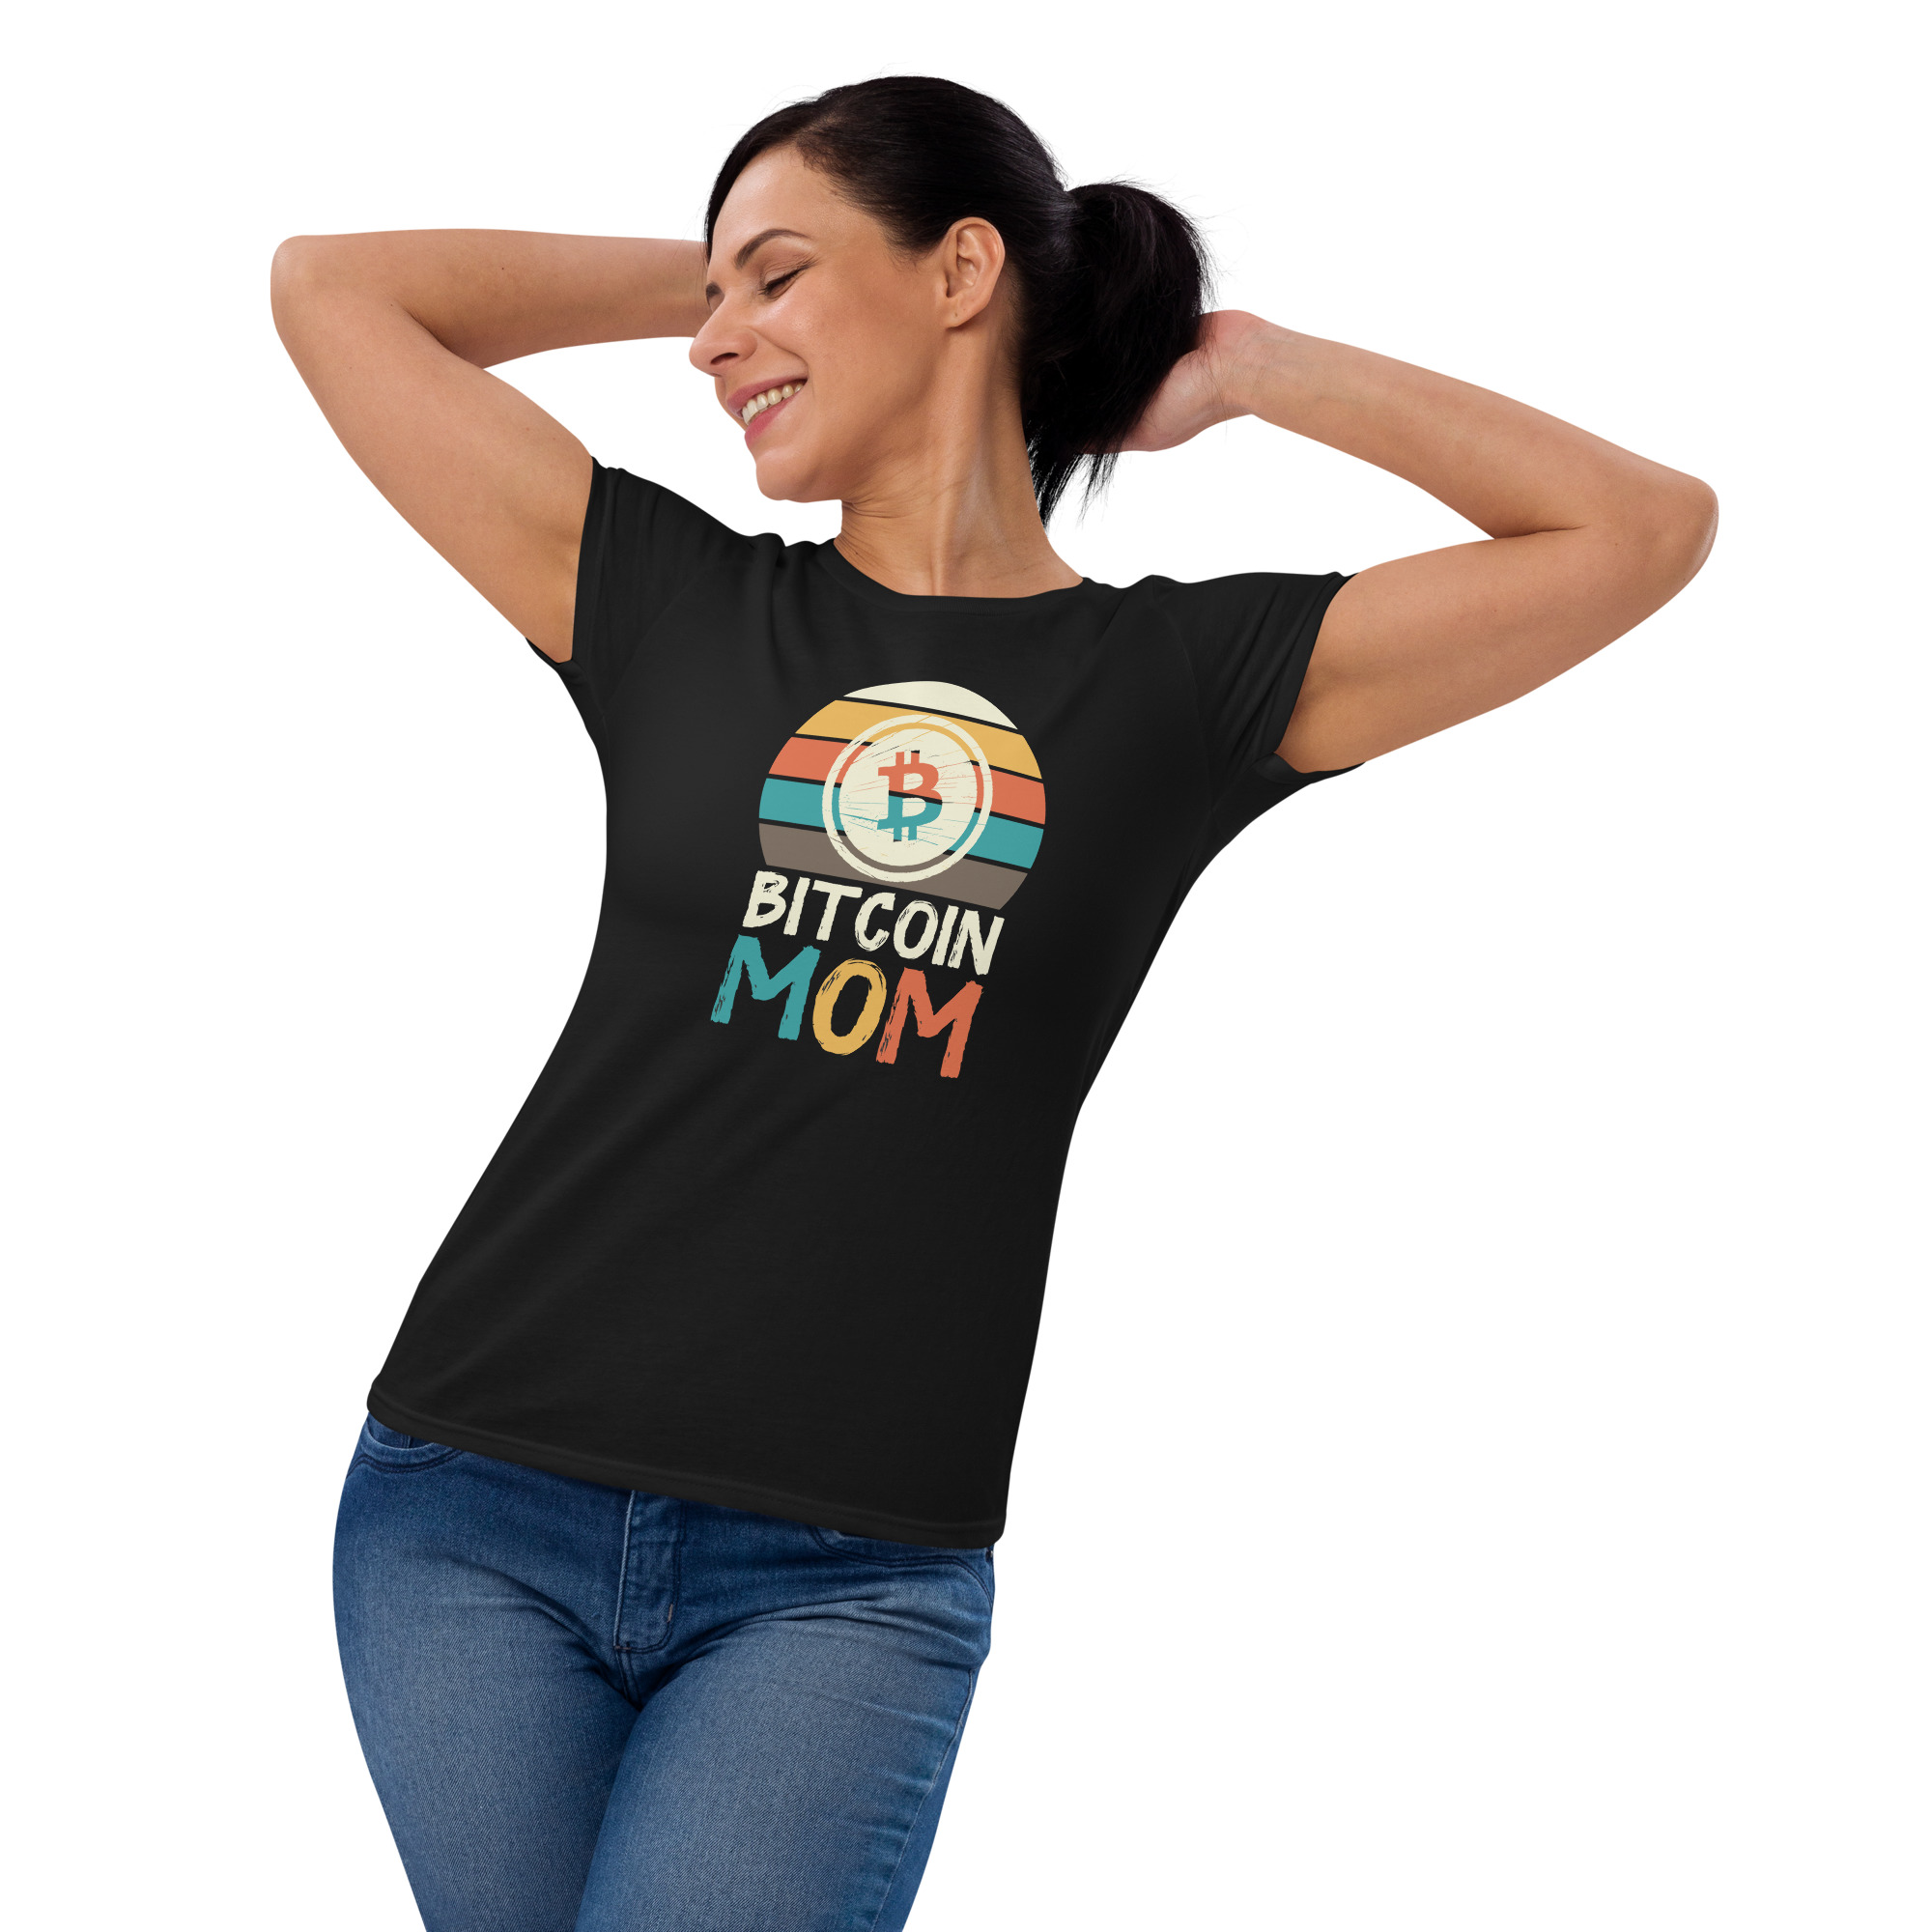 Bitcoin Mom – Women’s short sleeve t-shirt